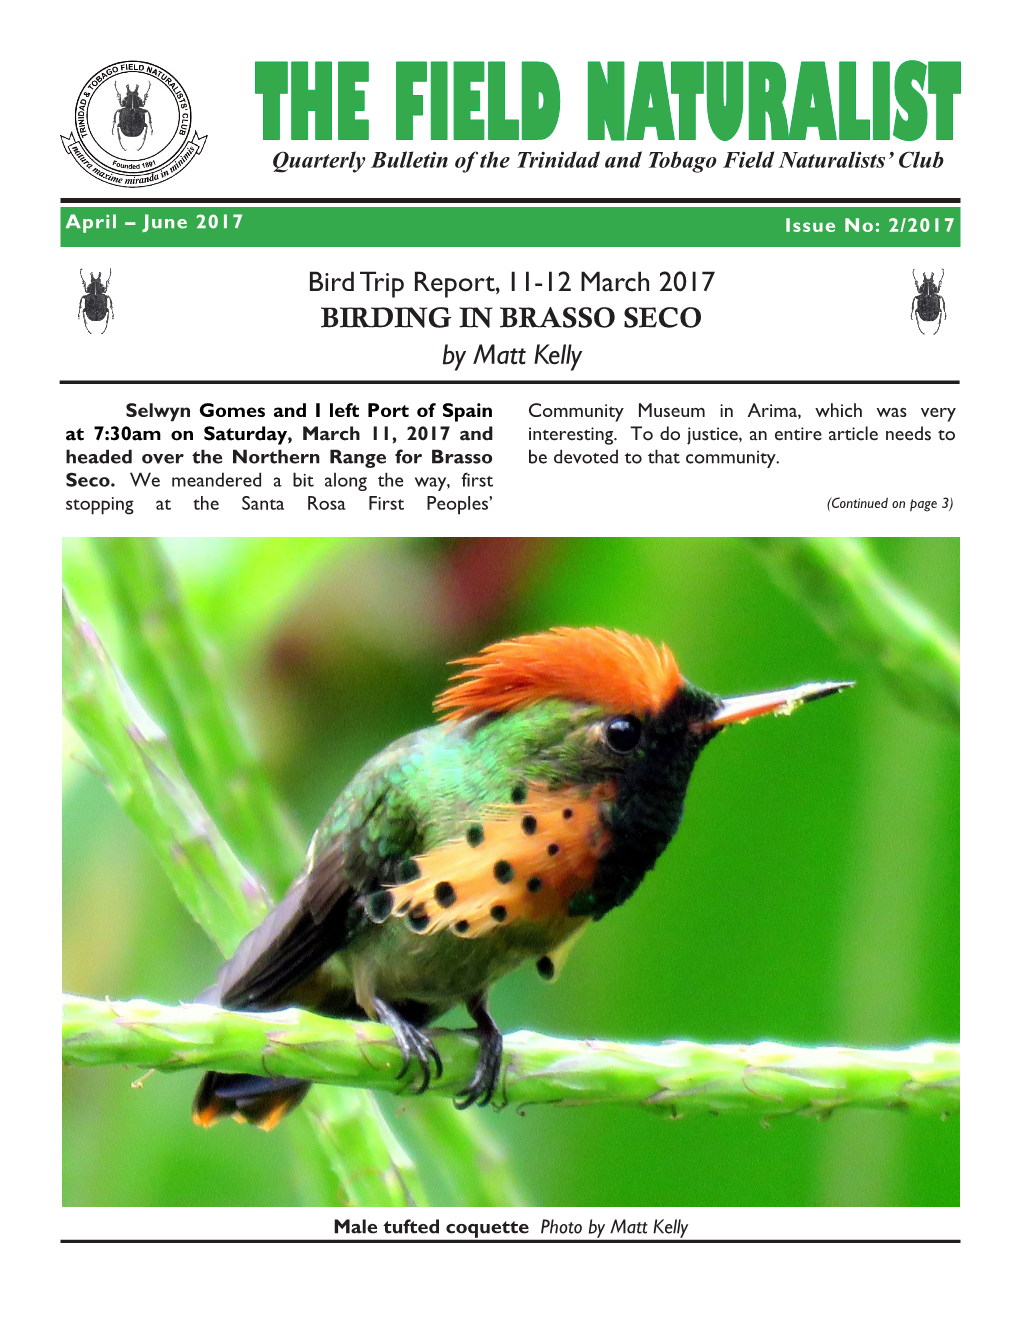 Bird Trip Report, 11-12 March 2017 BIRDING in BRASSO SECO by Matt Kelly